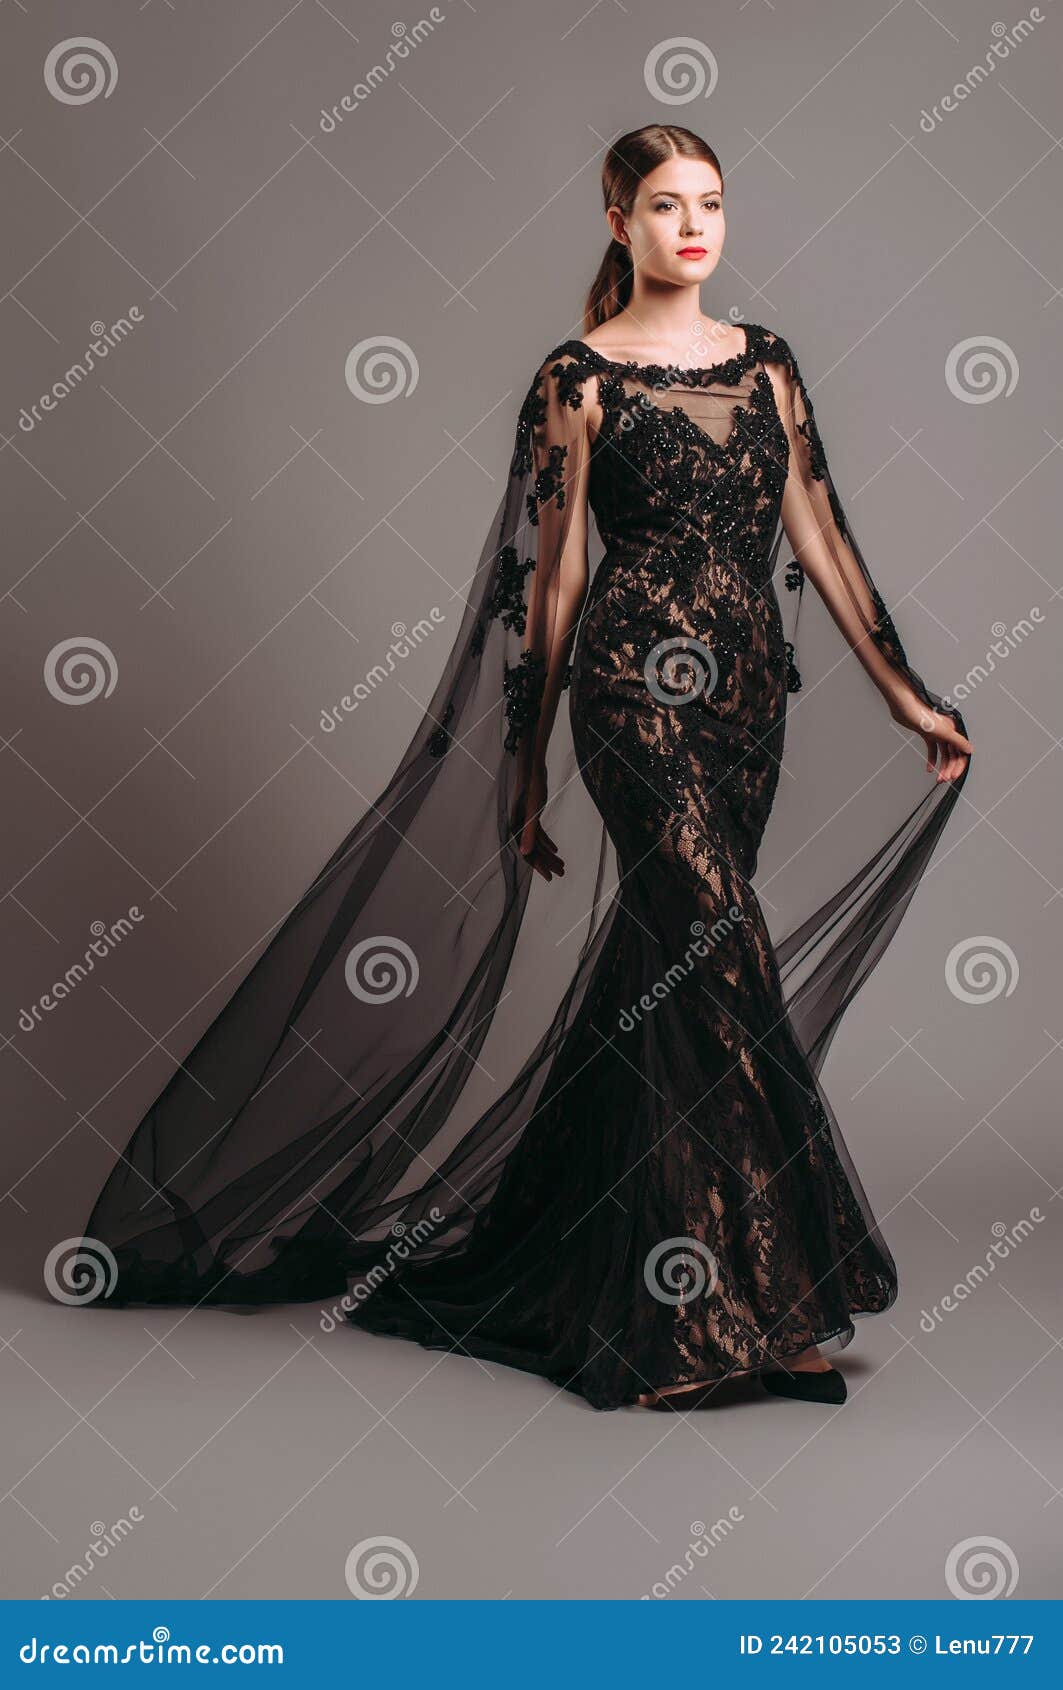 Dramatic 3D Rose Black Lace Strapless Mermaid Dress